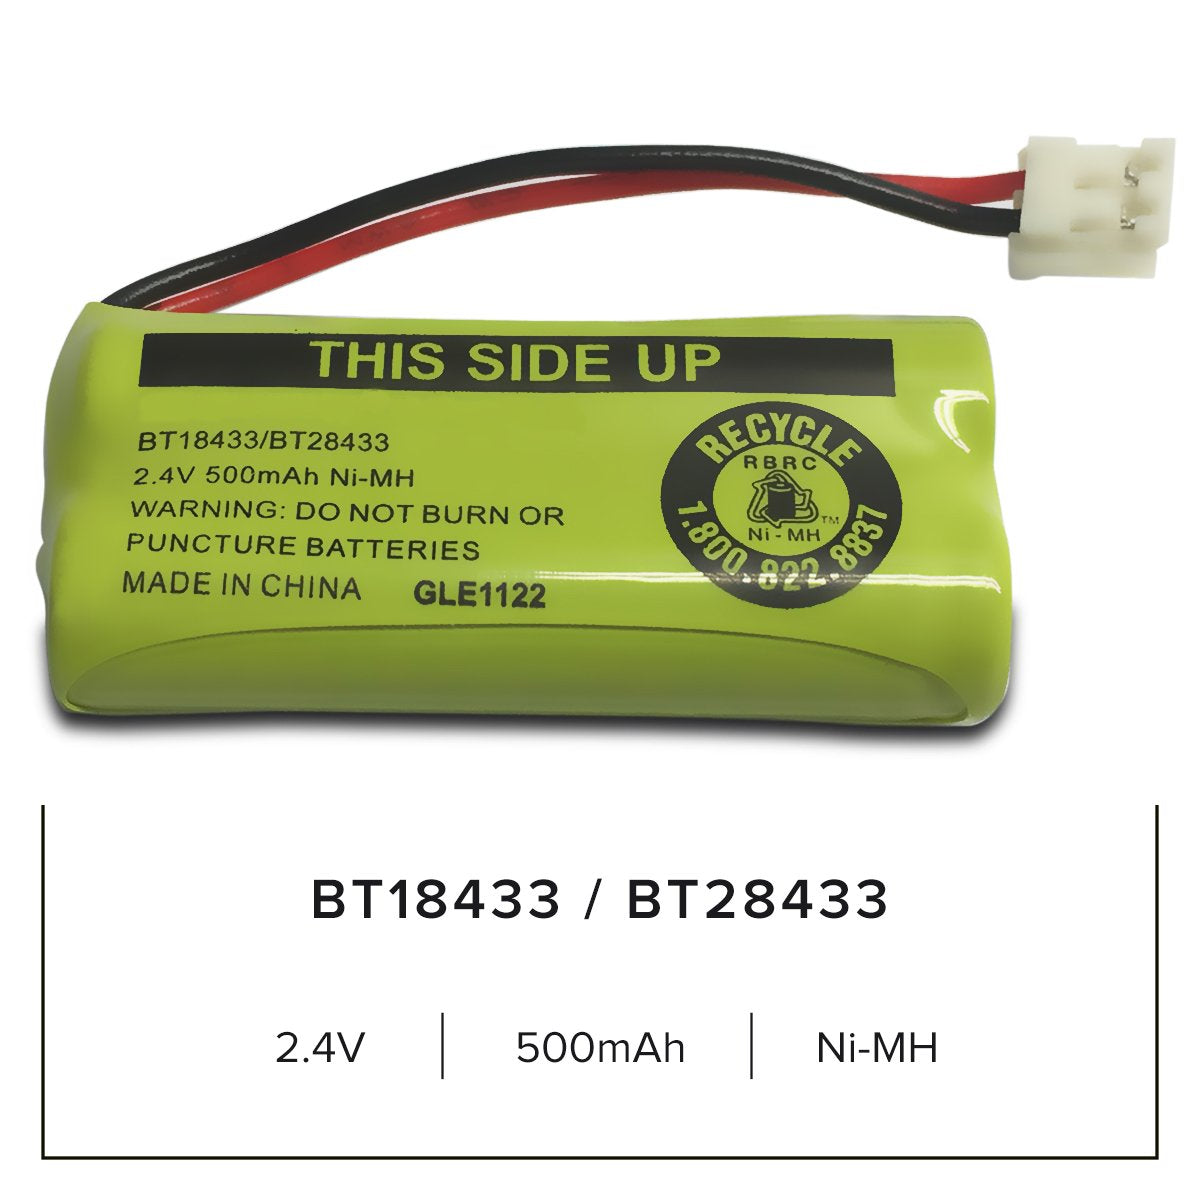 Uniden BT-1022 Cordless Phone Battery